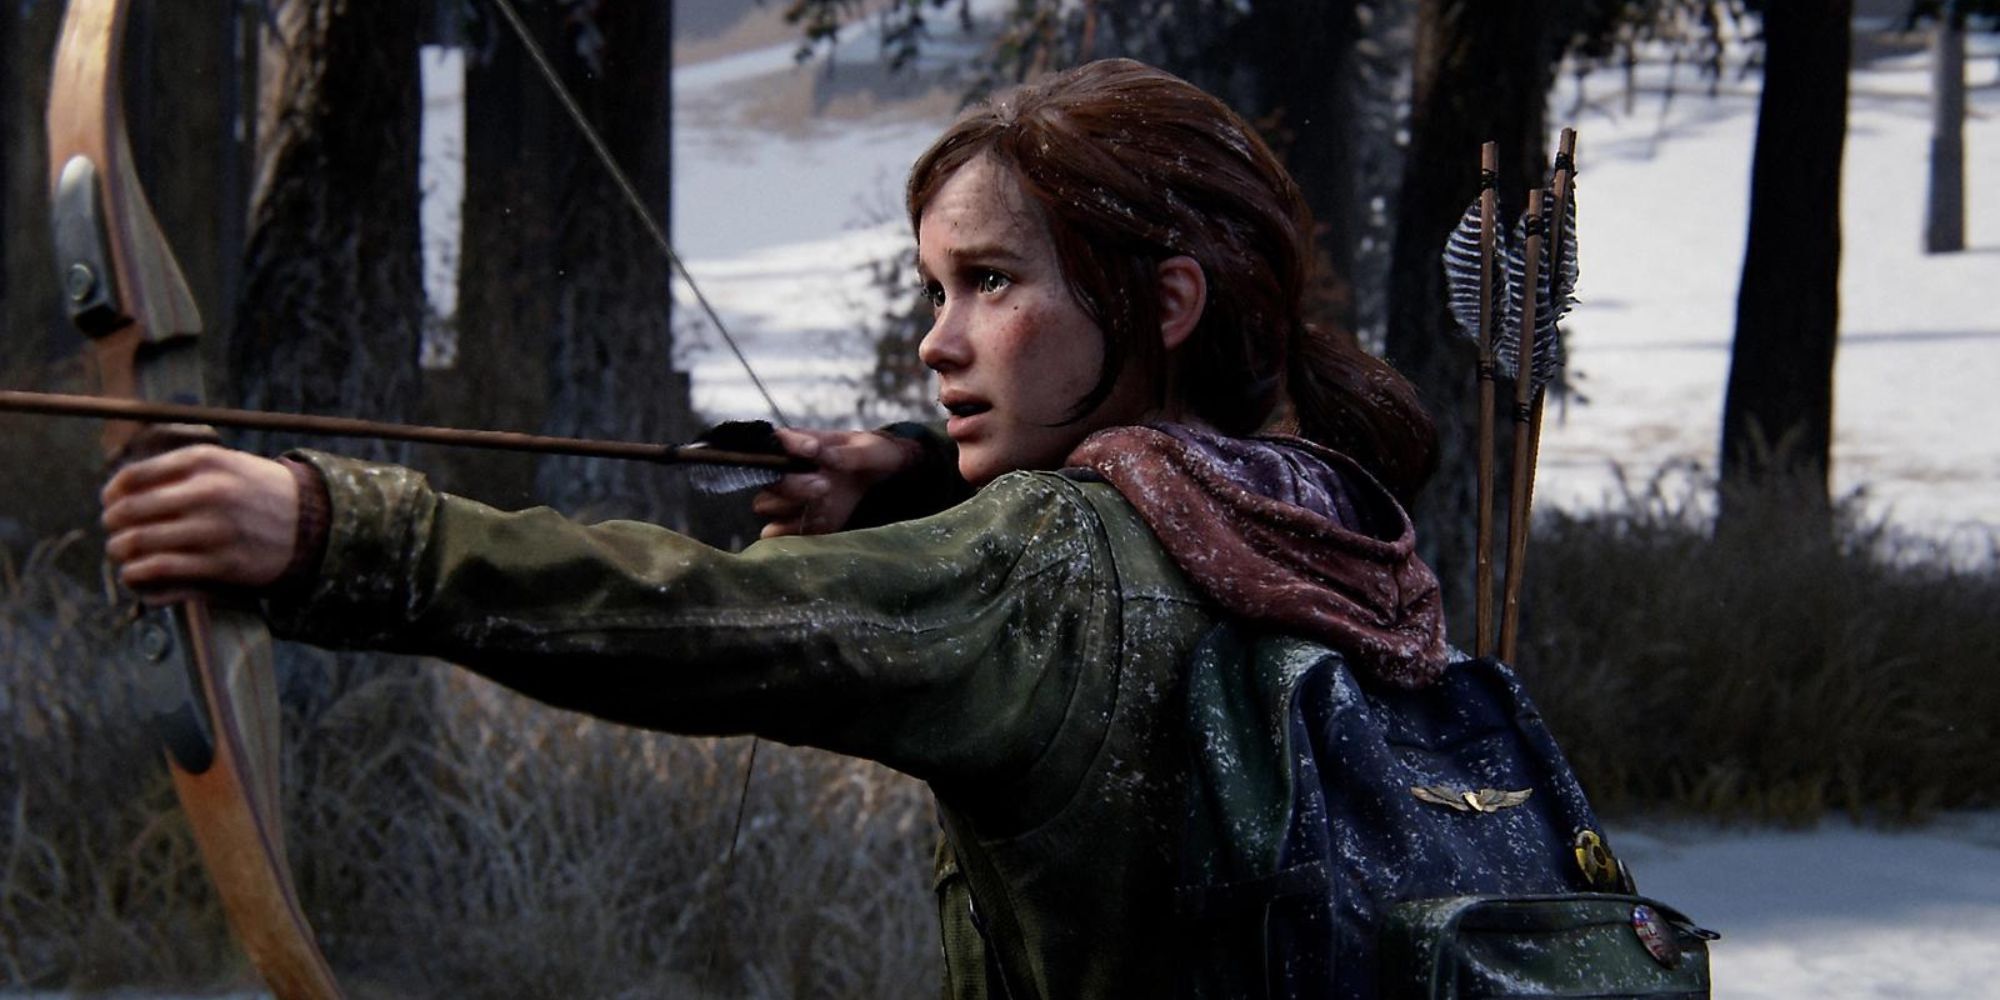 Ellie pulls back an arrow during Winter